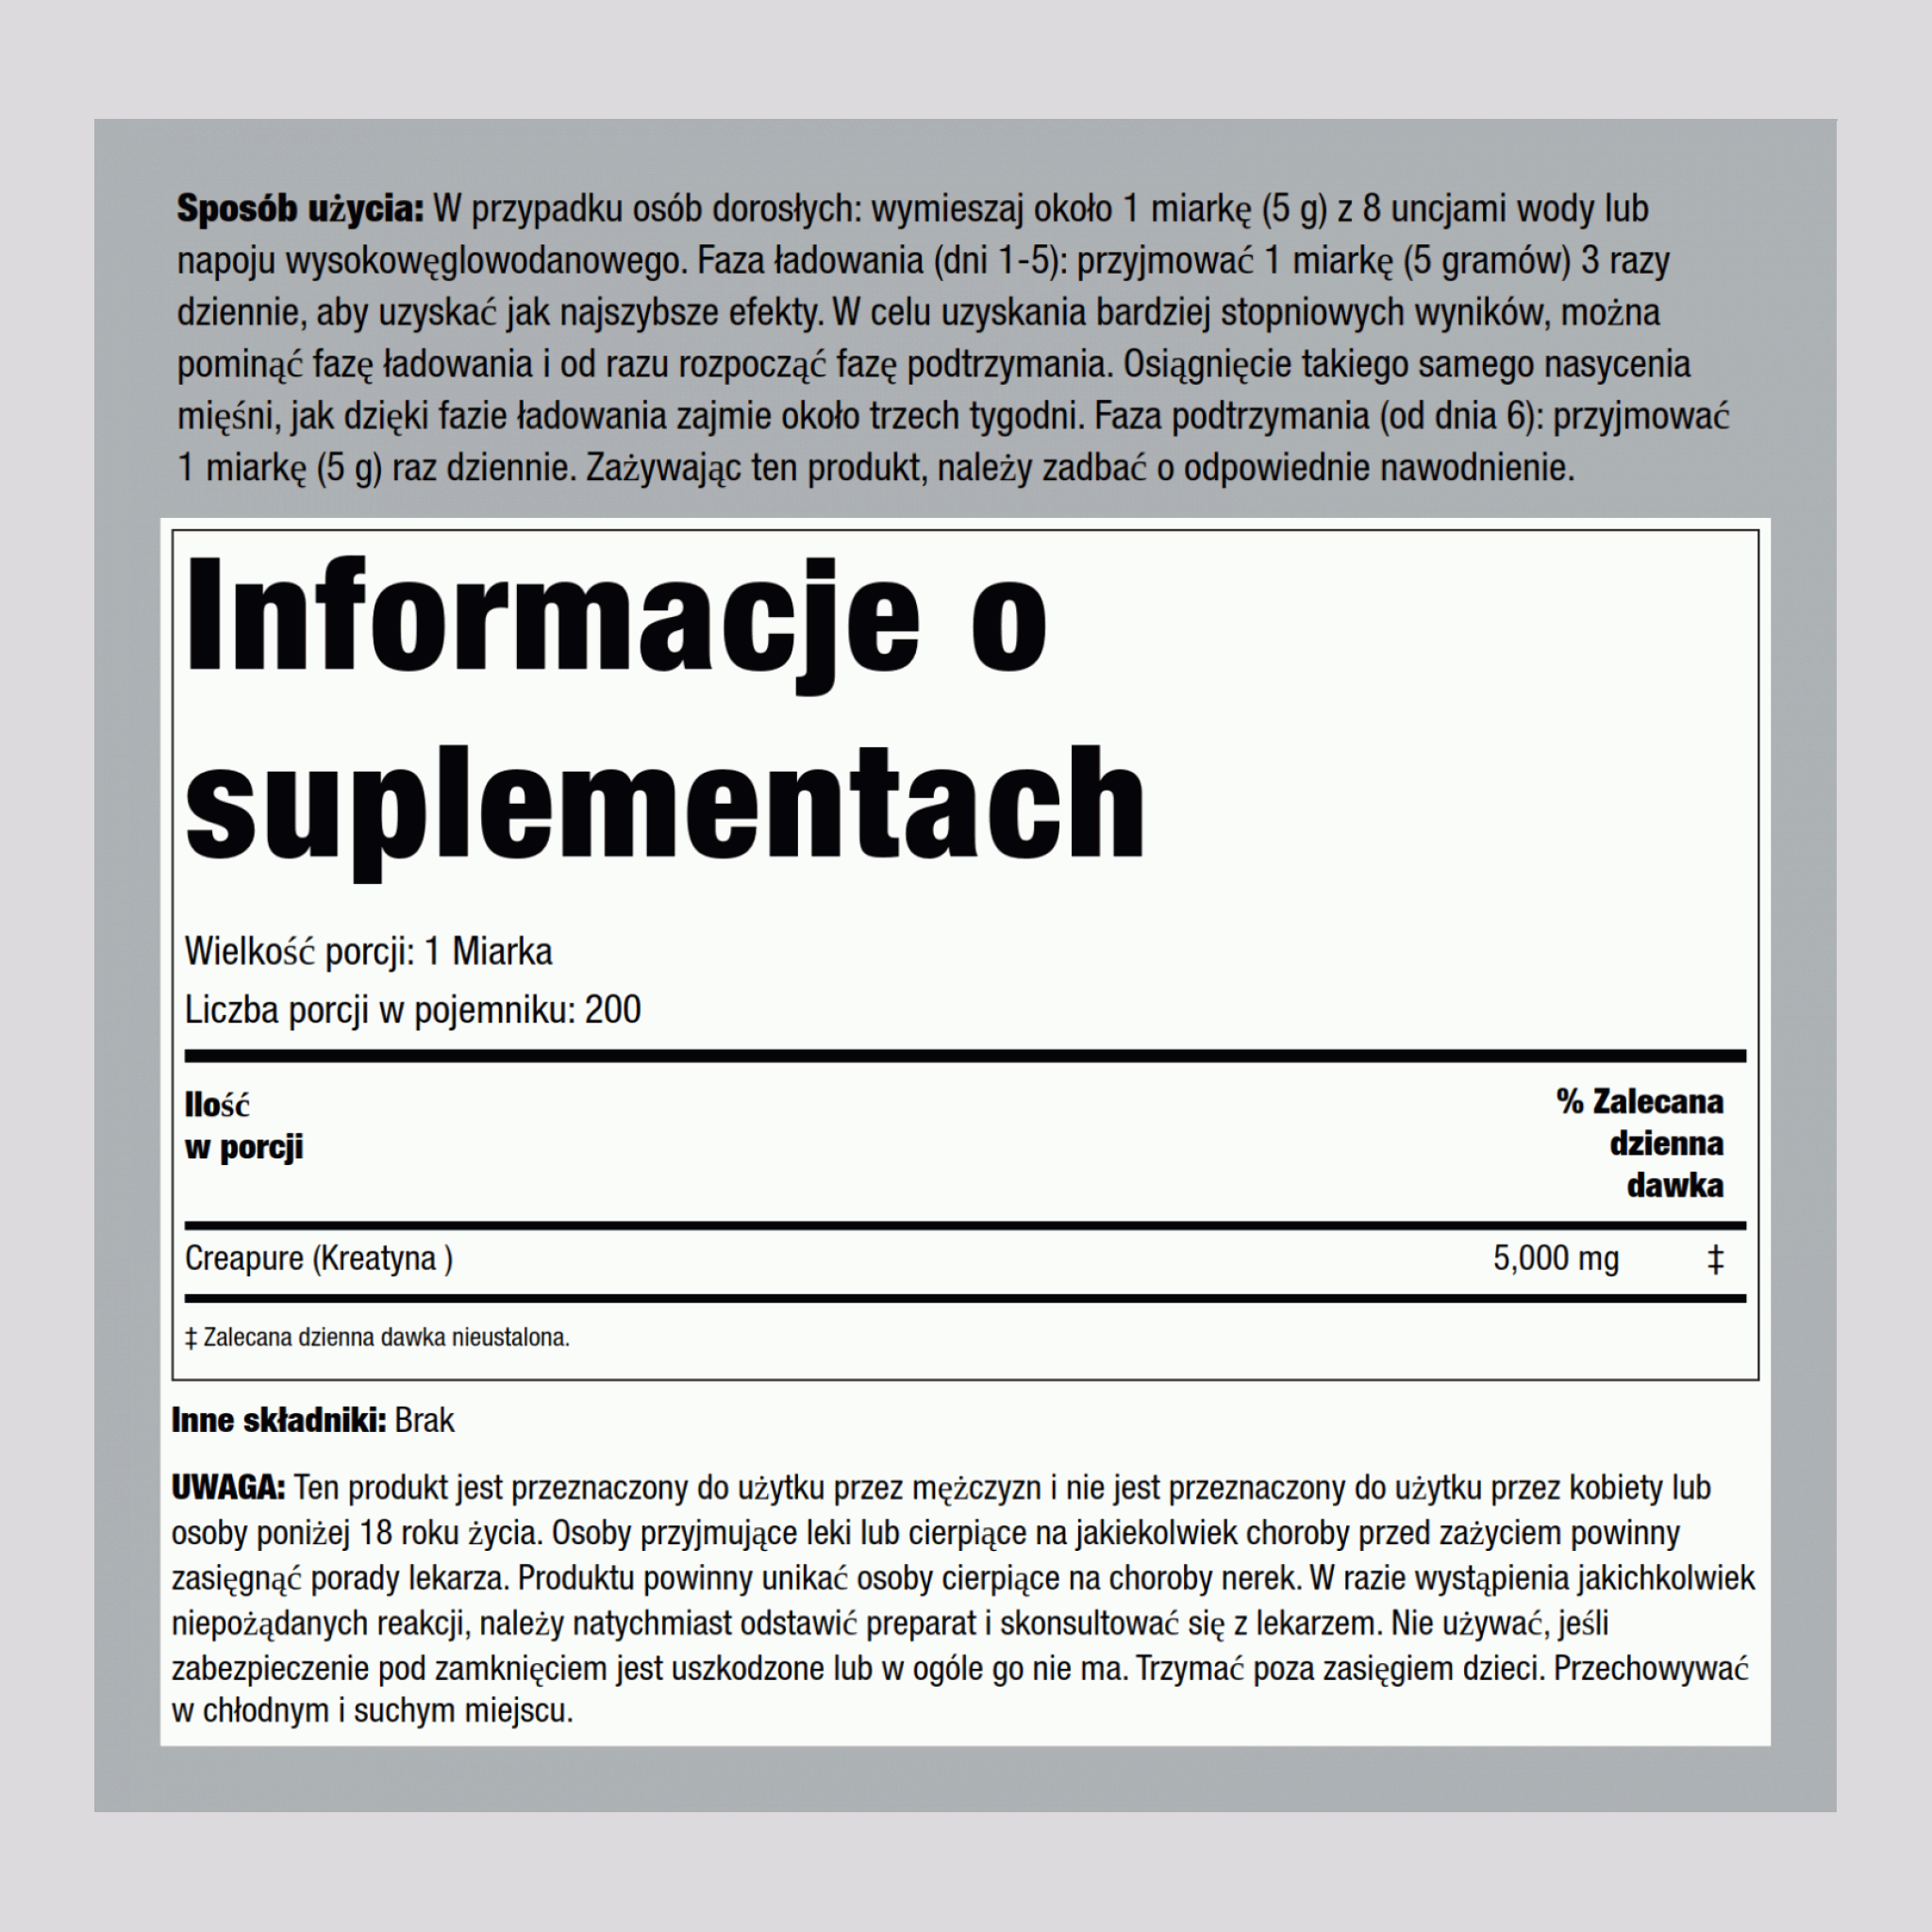 Niemiecka Monohydrat kretyny (Creapure) 5000 mg (na porcję) 2.2 lb 1000 g Butelka  